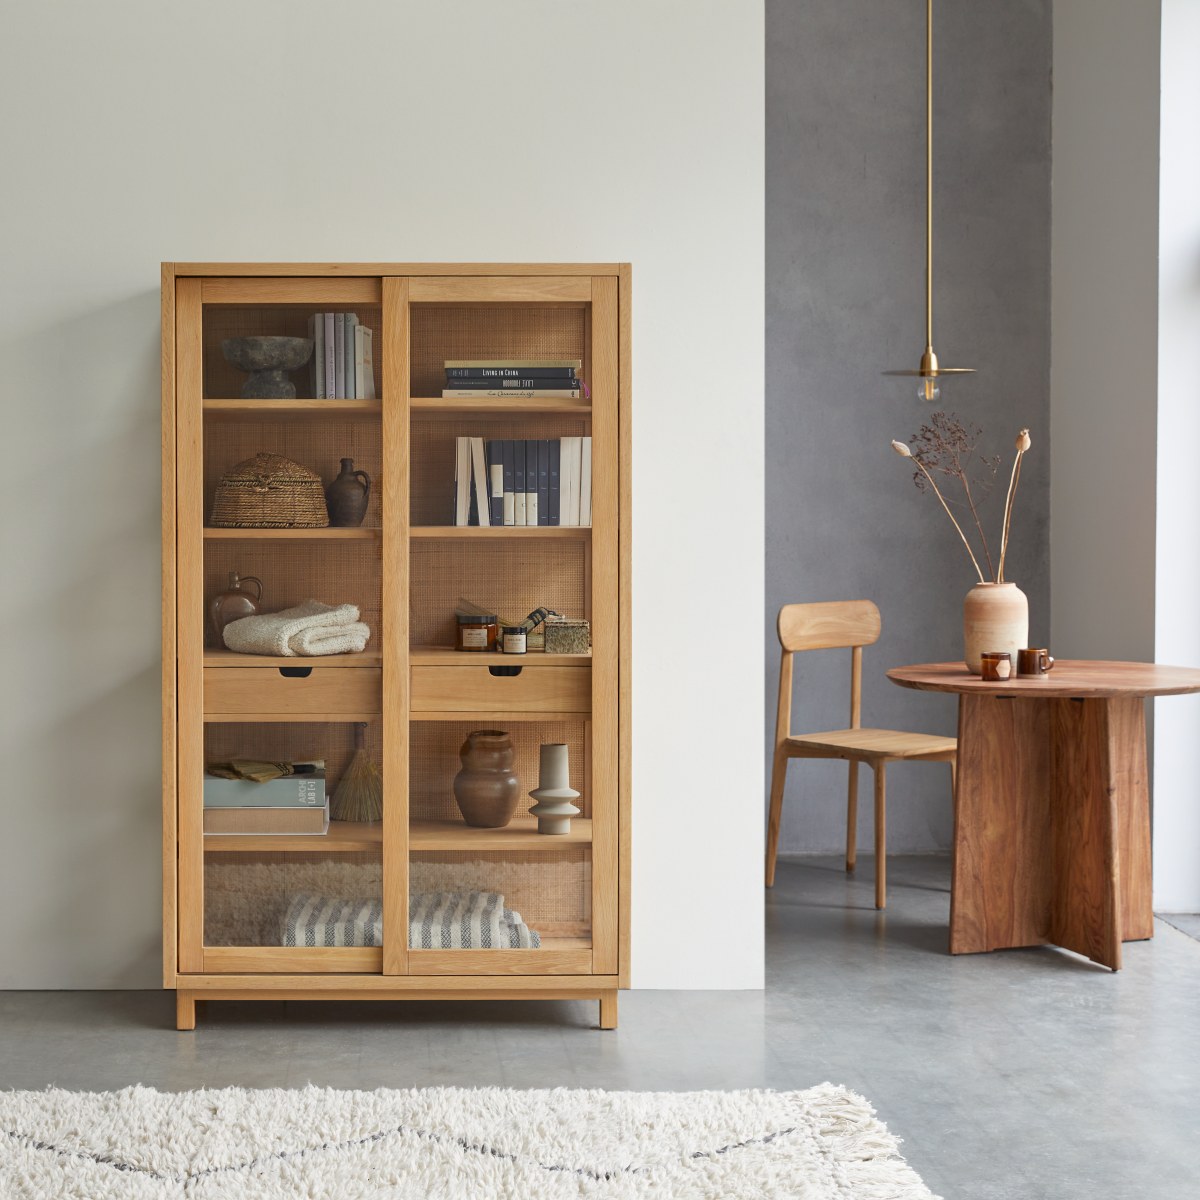 Adel - Solid oak bookcase